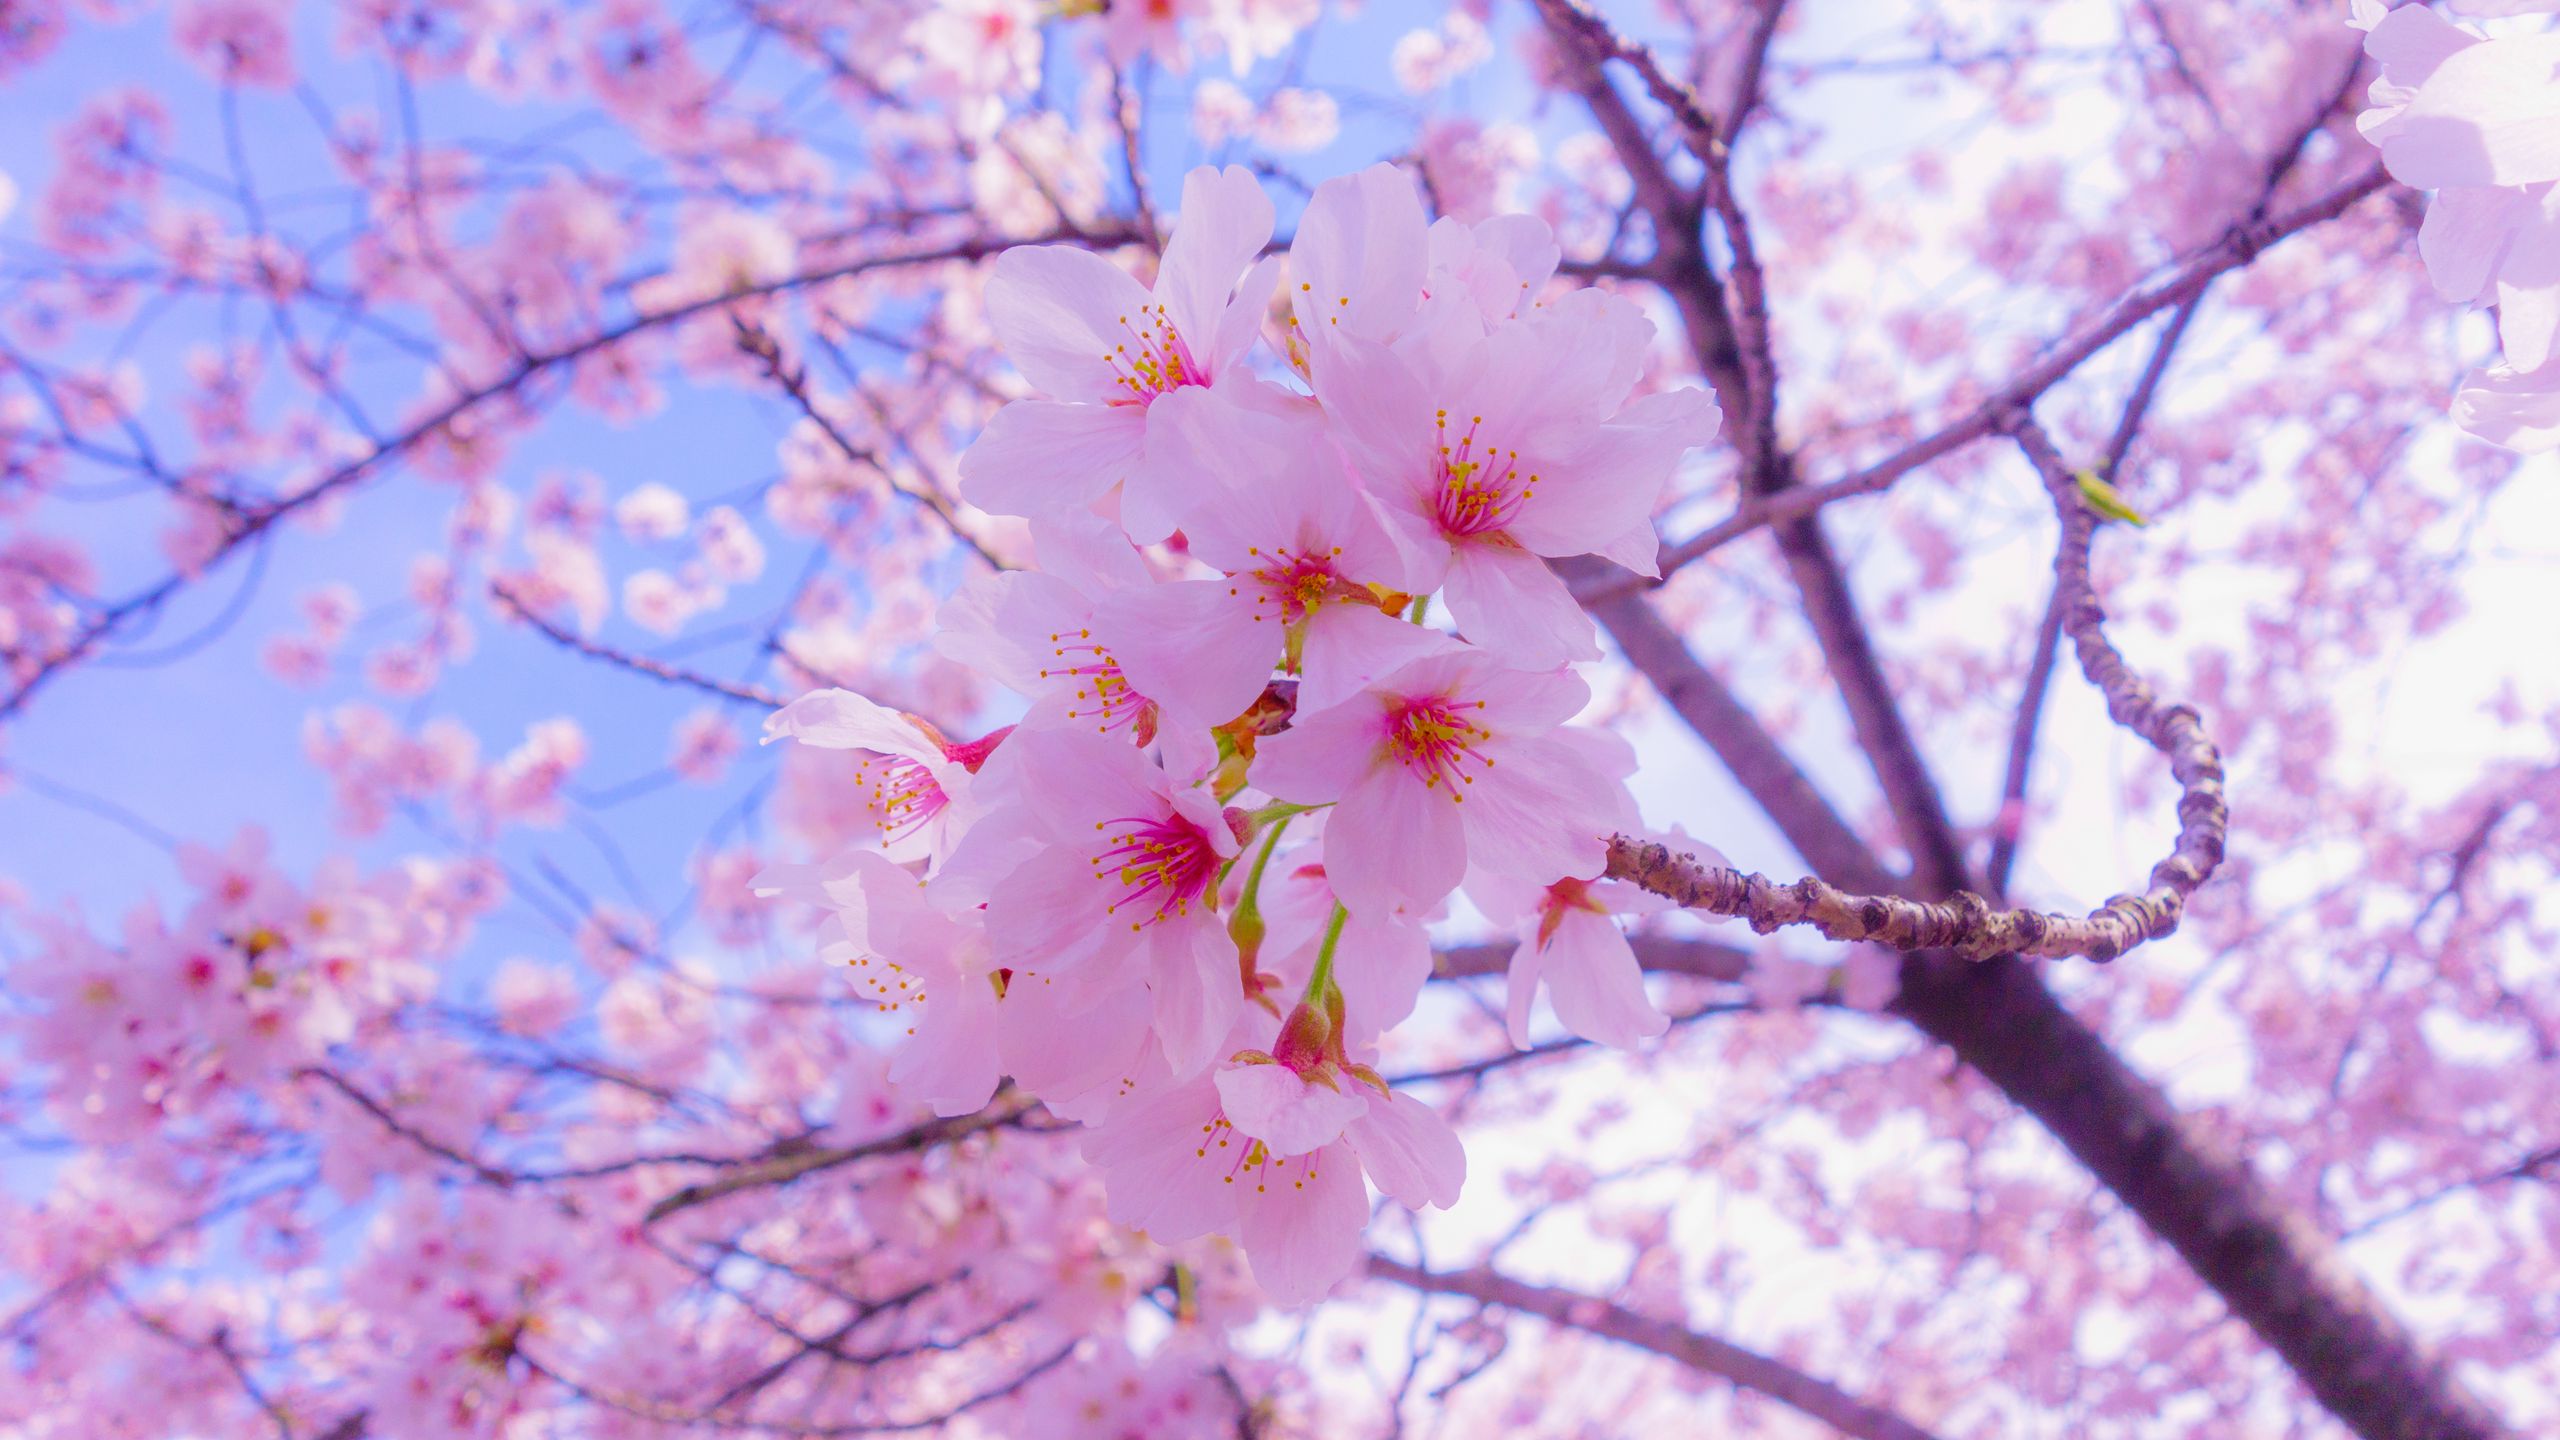 Download wallpaper 2560x1440 sakura, flowers, bloom, spring, pink widescreen 16:9 HD background